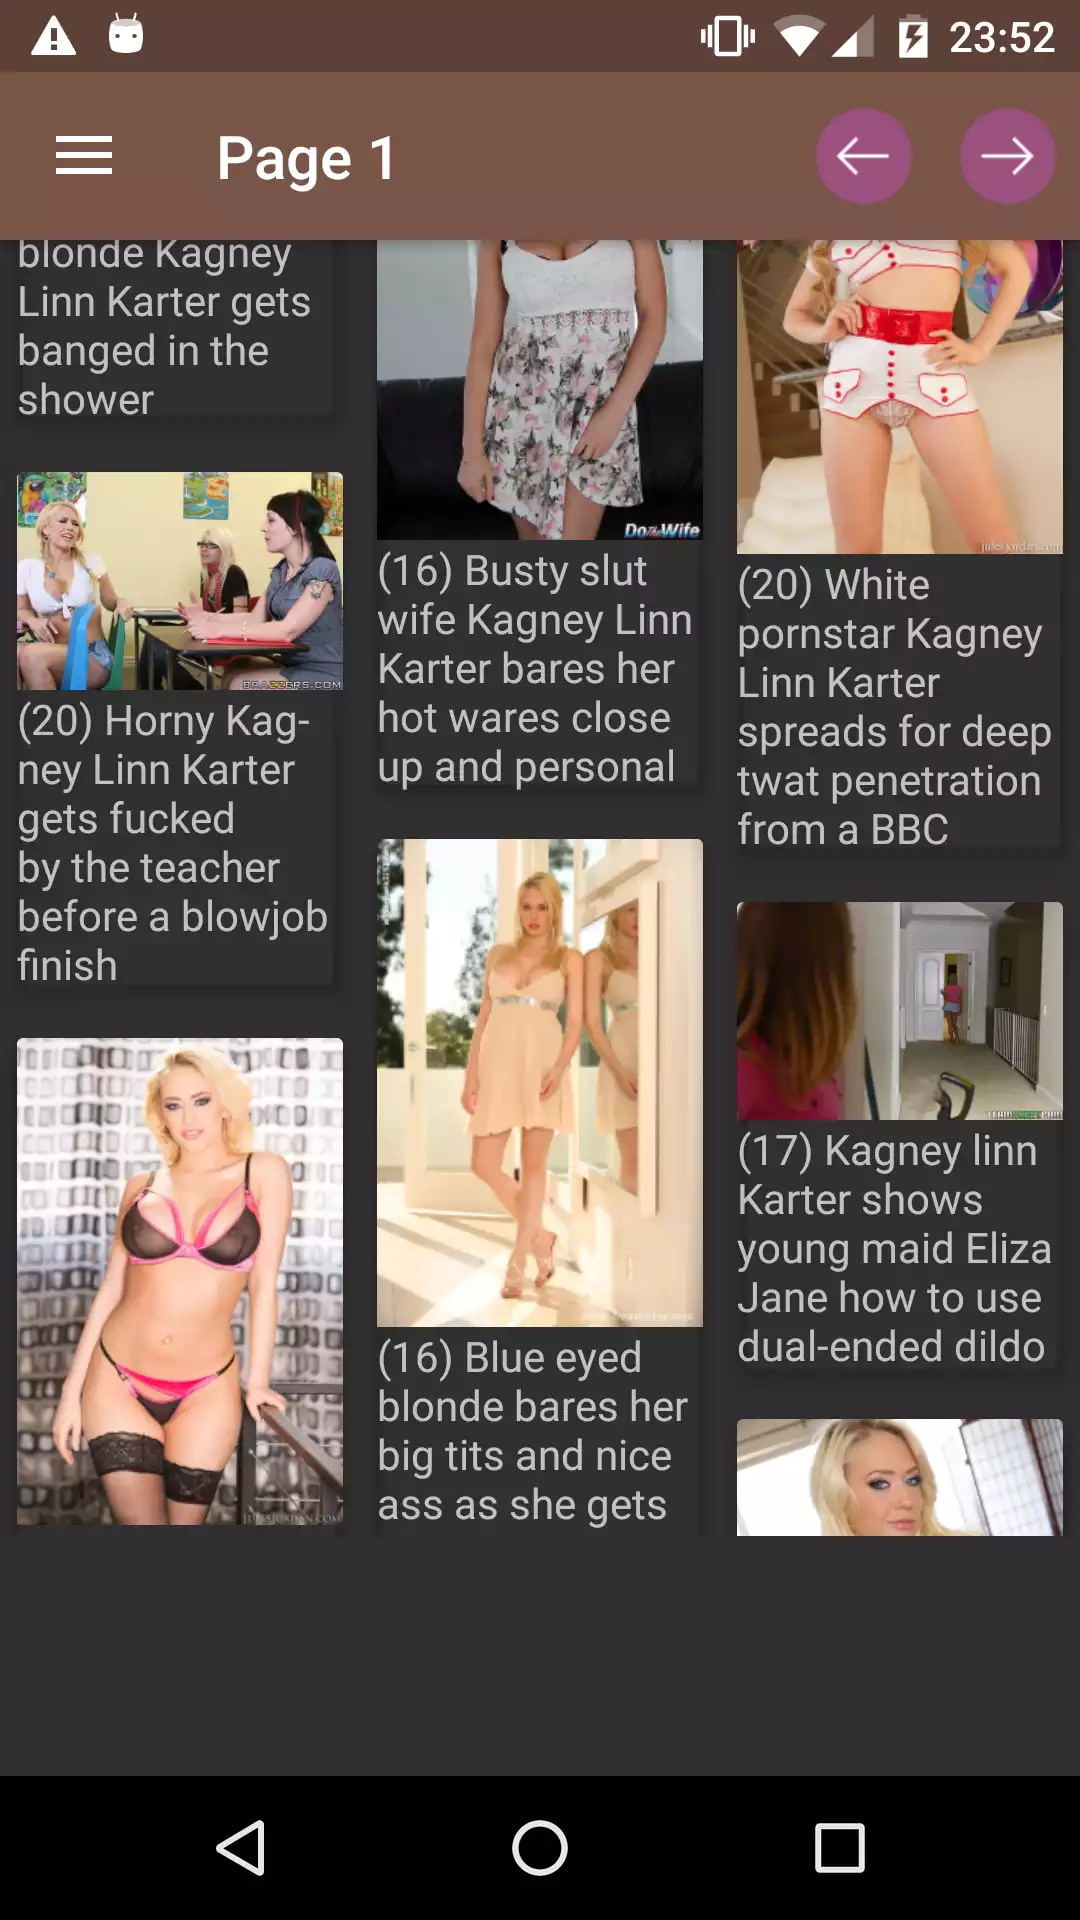 Kagney Linn best,hentai,lair,demonic,manga,feast,apps,mythras,hot,photos,fuck,pornstars,sexy,galleries,porn,caprice,wallpaper,app,download,puzzle,gallery,pictures,apk